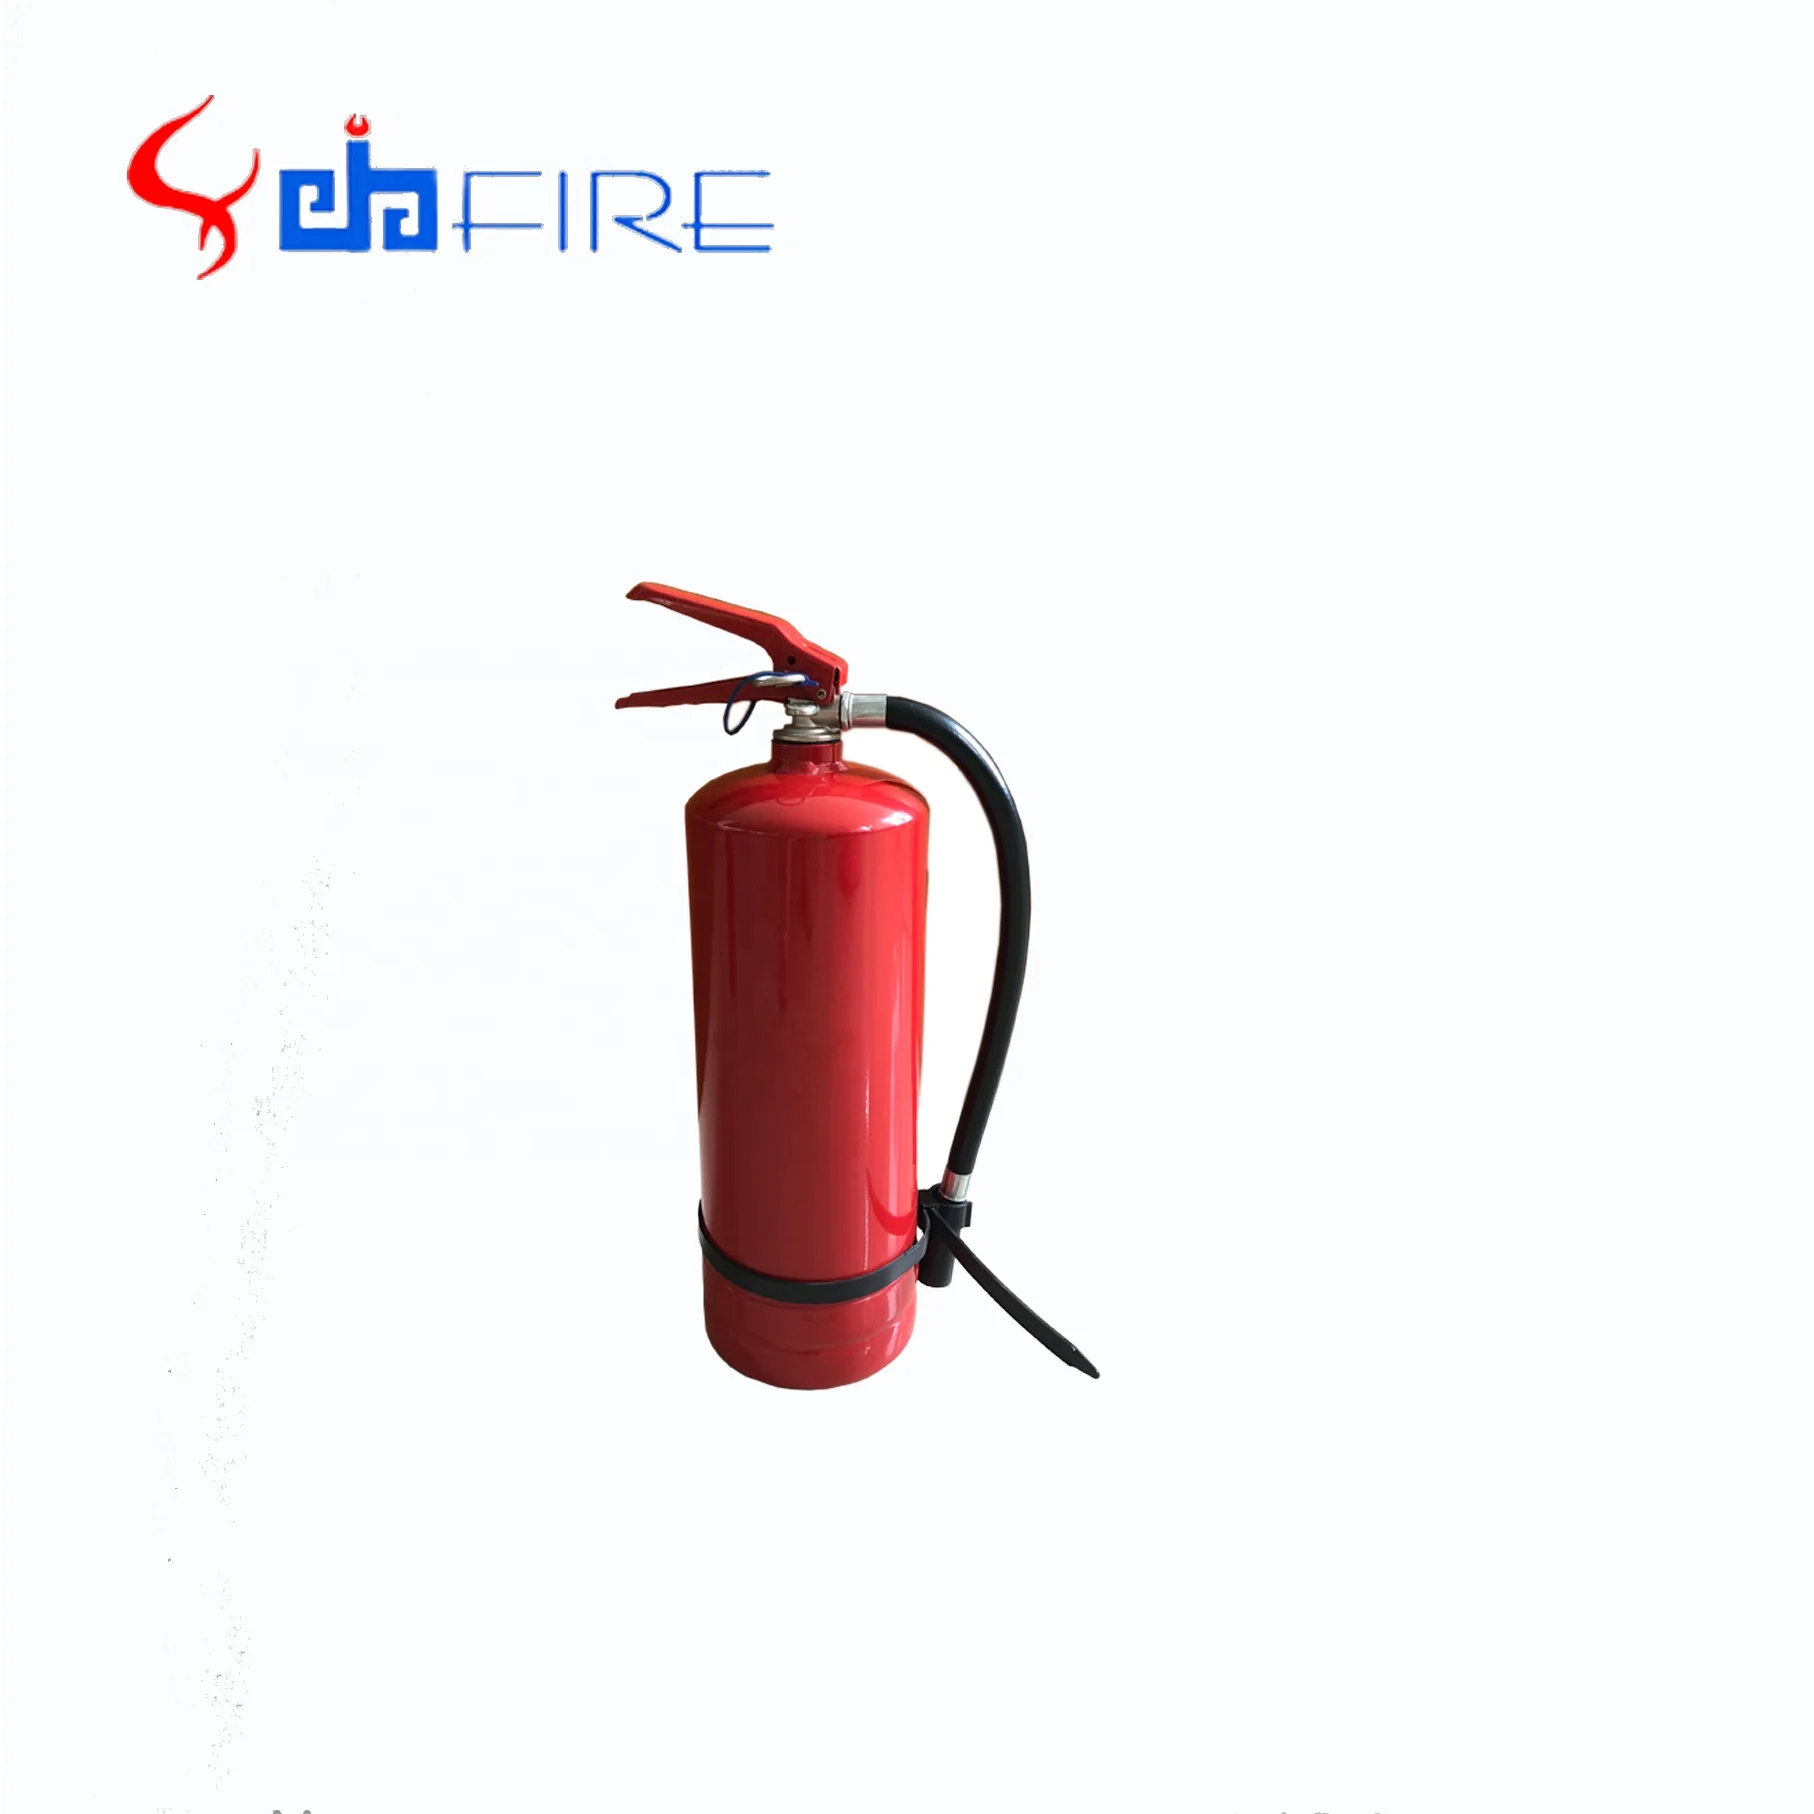 
3kg abc dry powder fire extinguisher china iso9001 empty safety portable fire extinguisher cylinder 